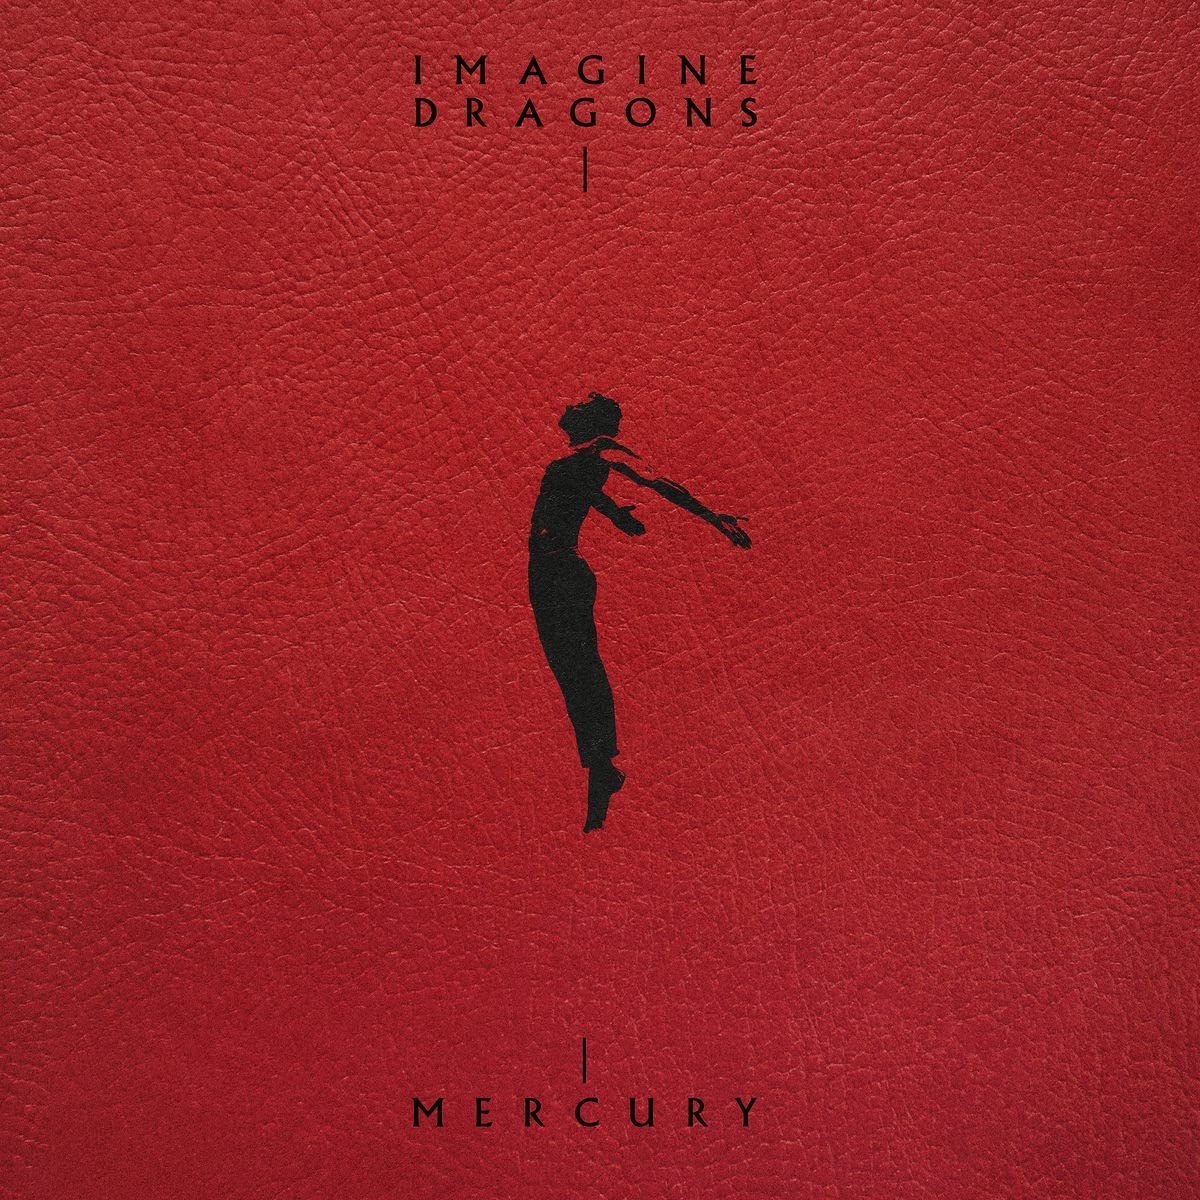 Imagine Dragons Mercury Act 2 - Ireland Vinyl